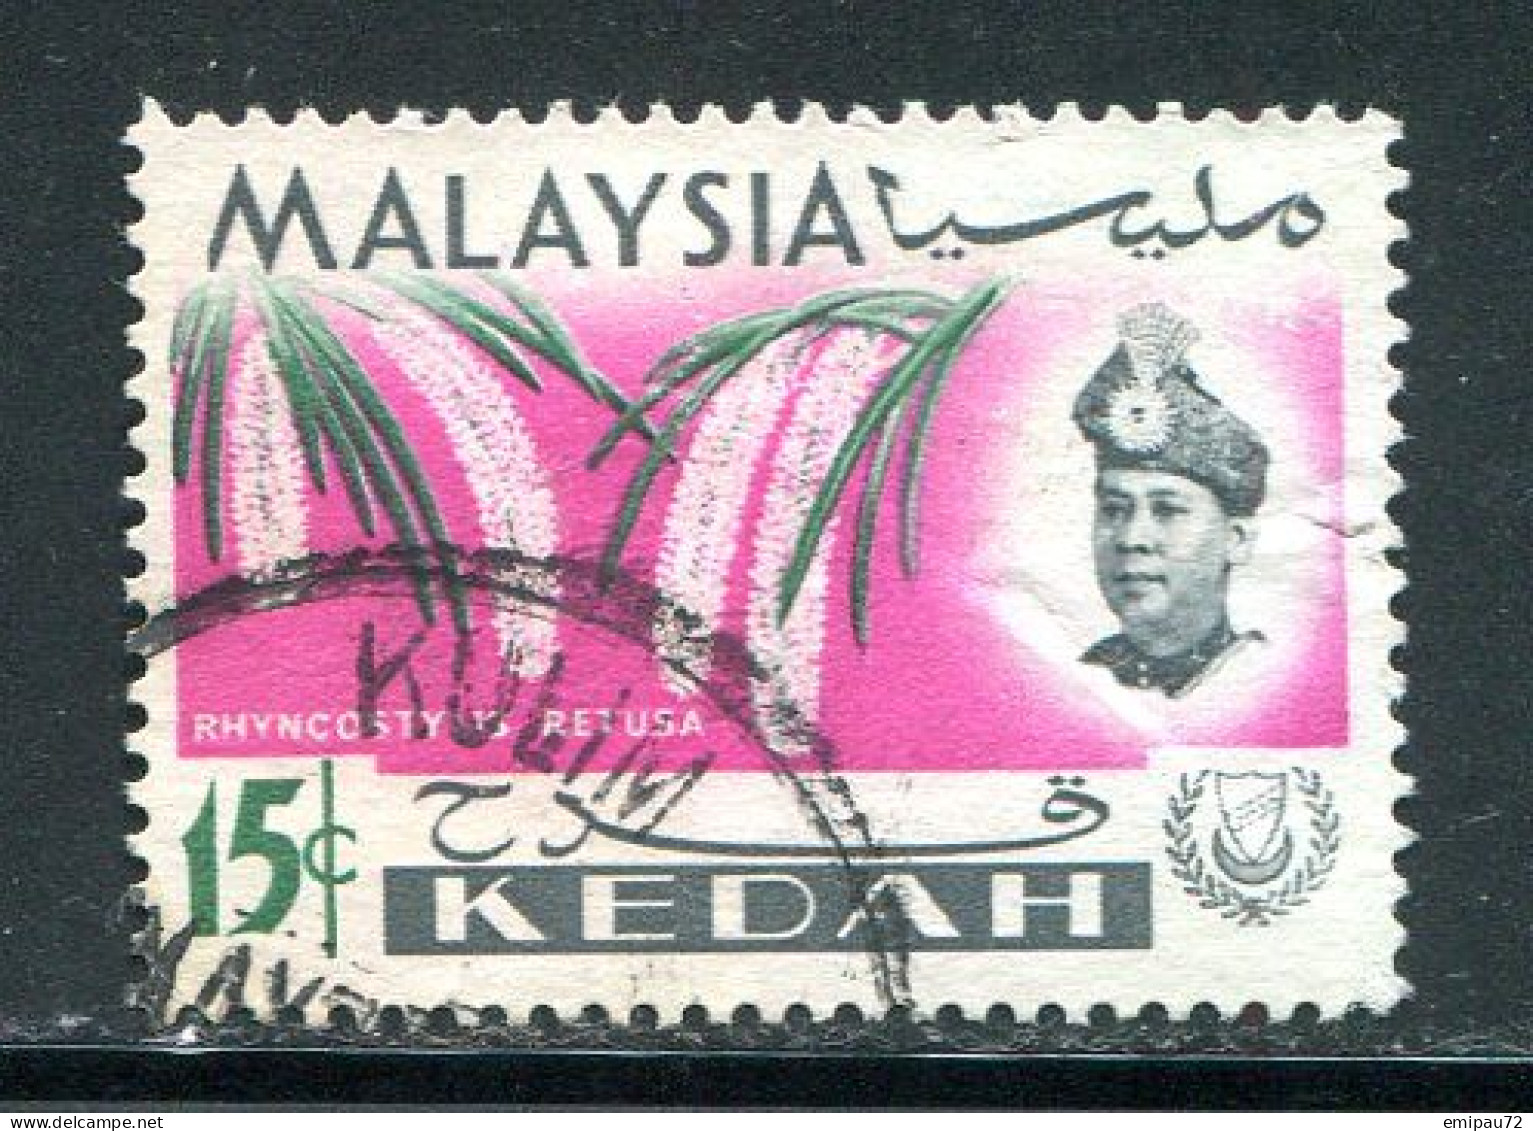 KEDAH- Y&T N°117- Oblitéré - Kedah